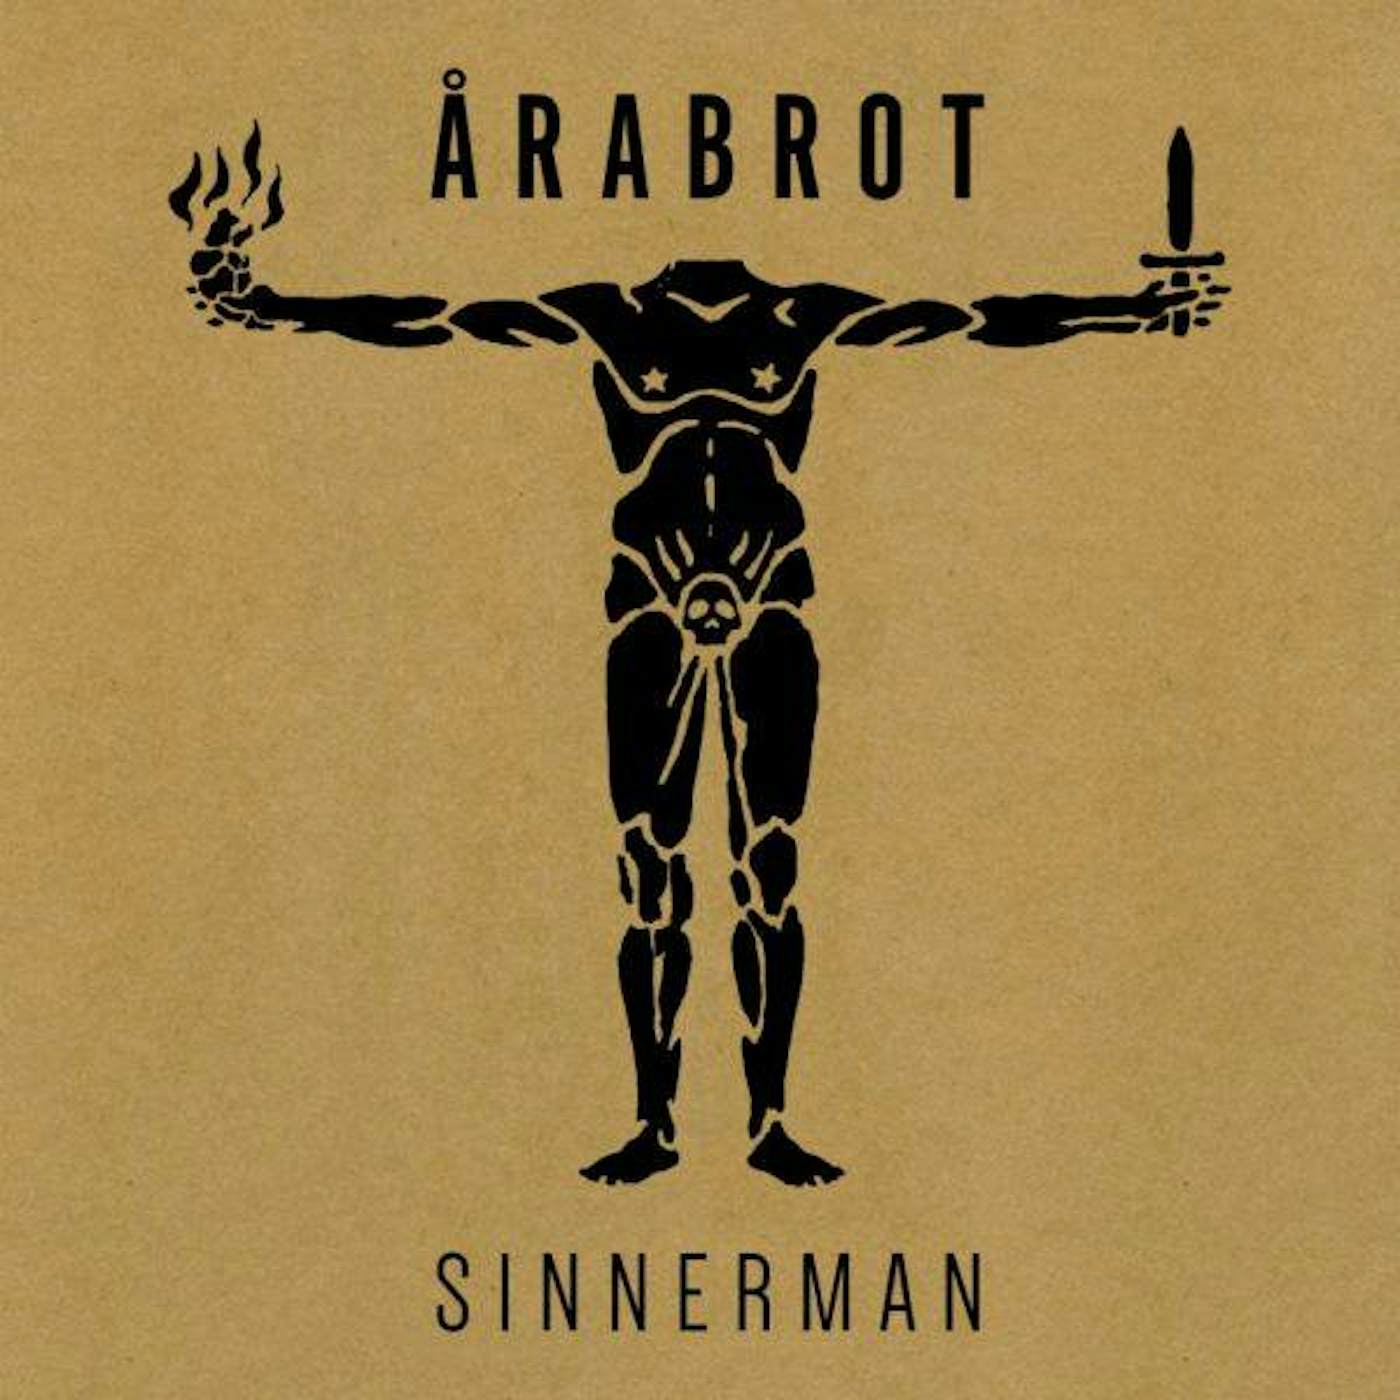 Årabrot Sinnerman Vinyl Record